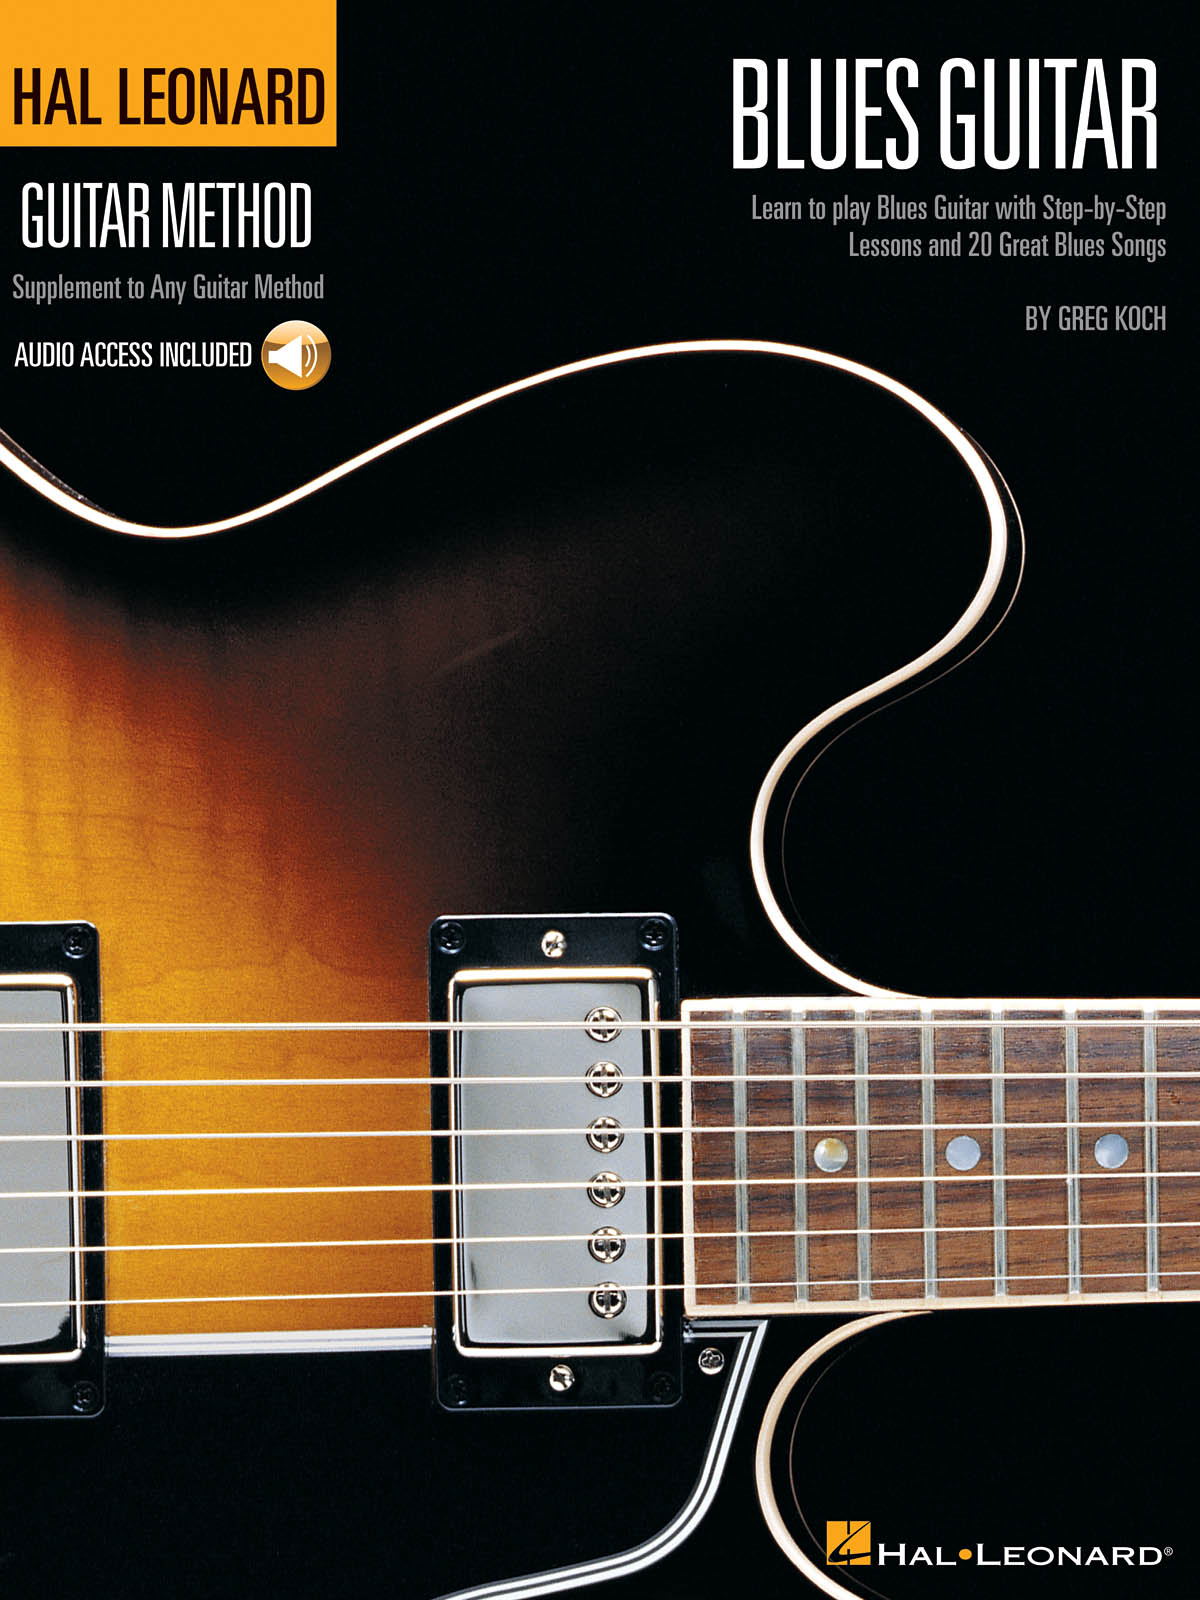 Hal Leonard Guitar Method: Blues Guitar - učebnice hry na kytaru